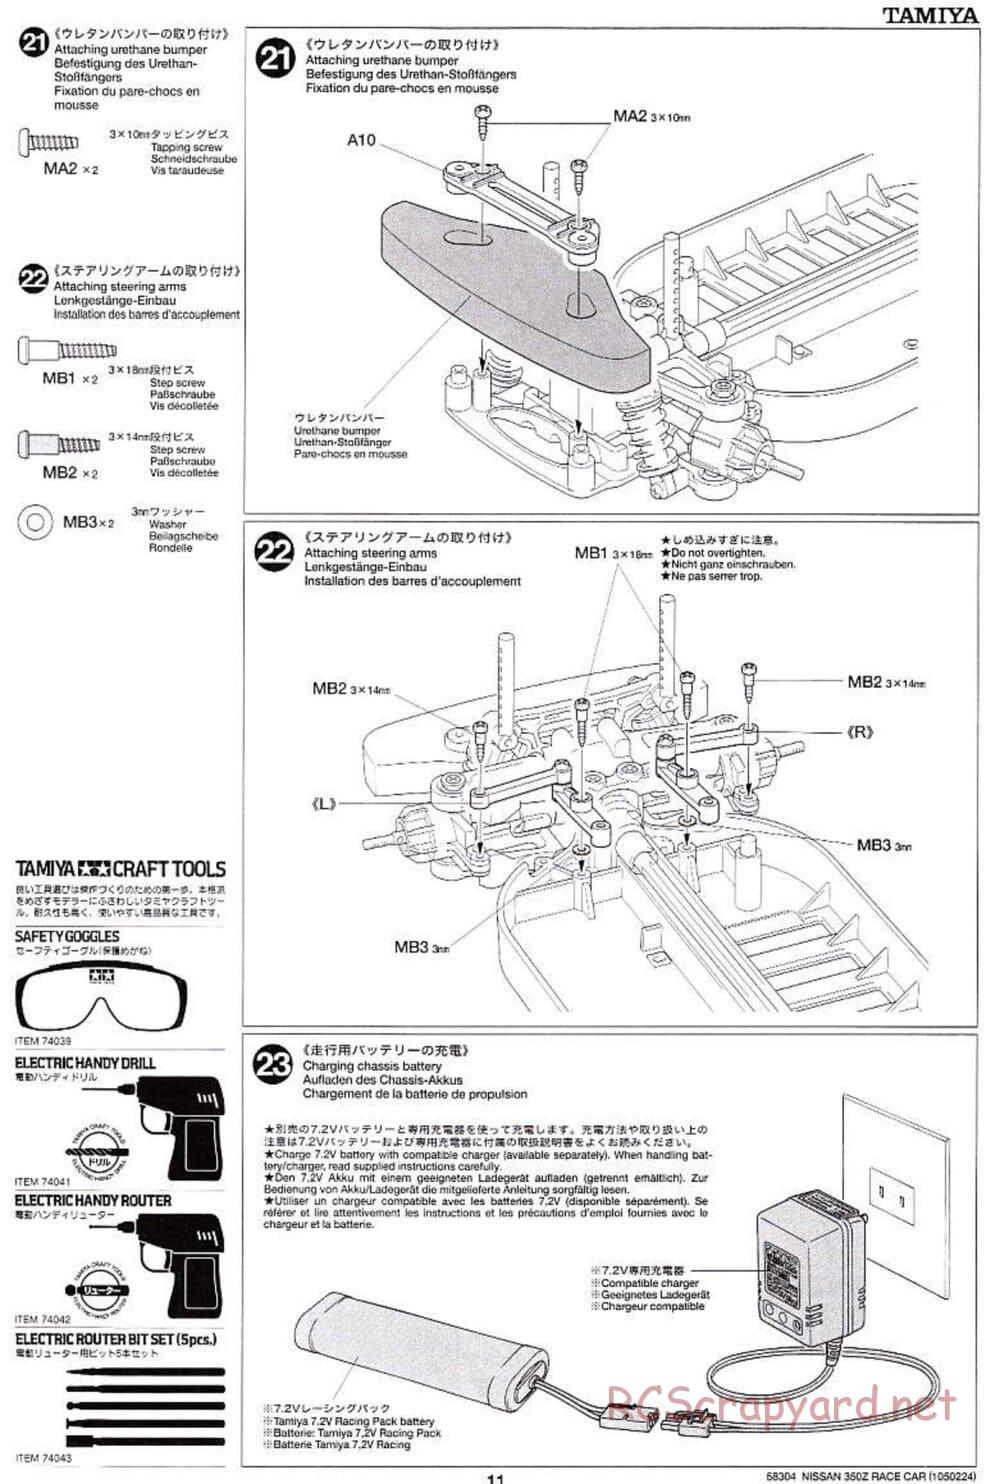 Tamiya - Nissan 350Z Race-Car - TT-01 Chassis - Manual - Page 11